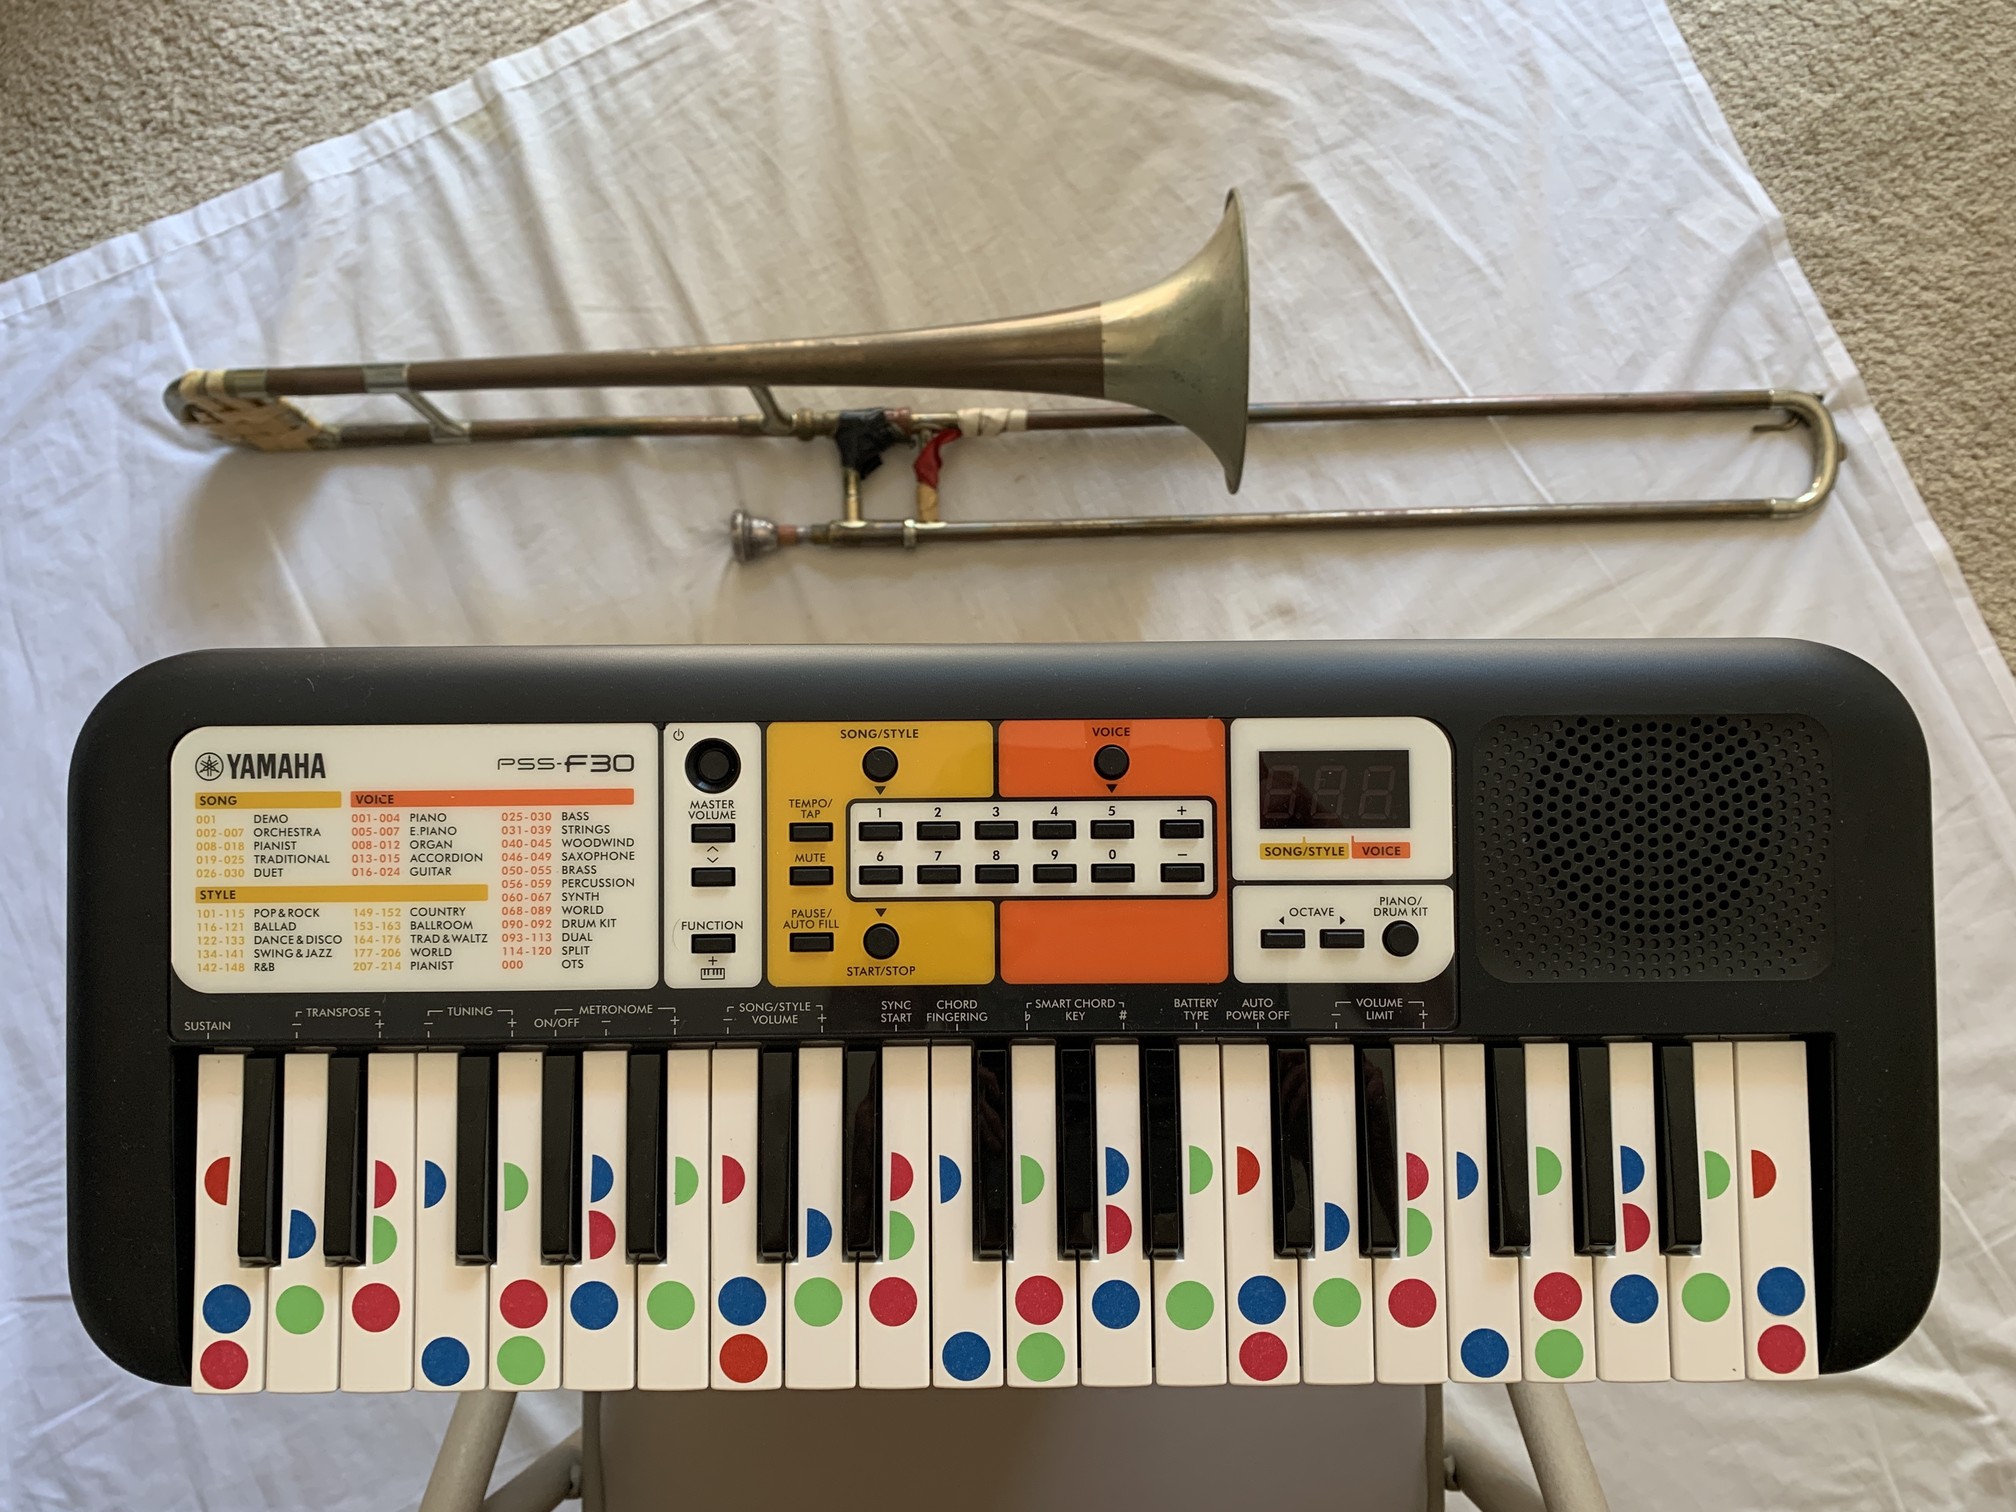 trombone and colorized keyboard